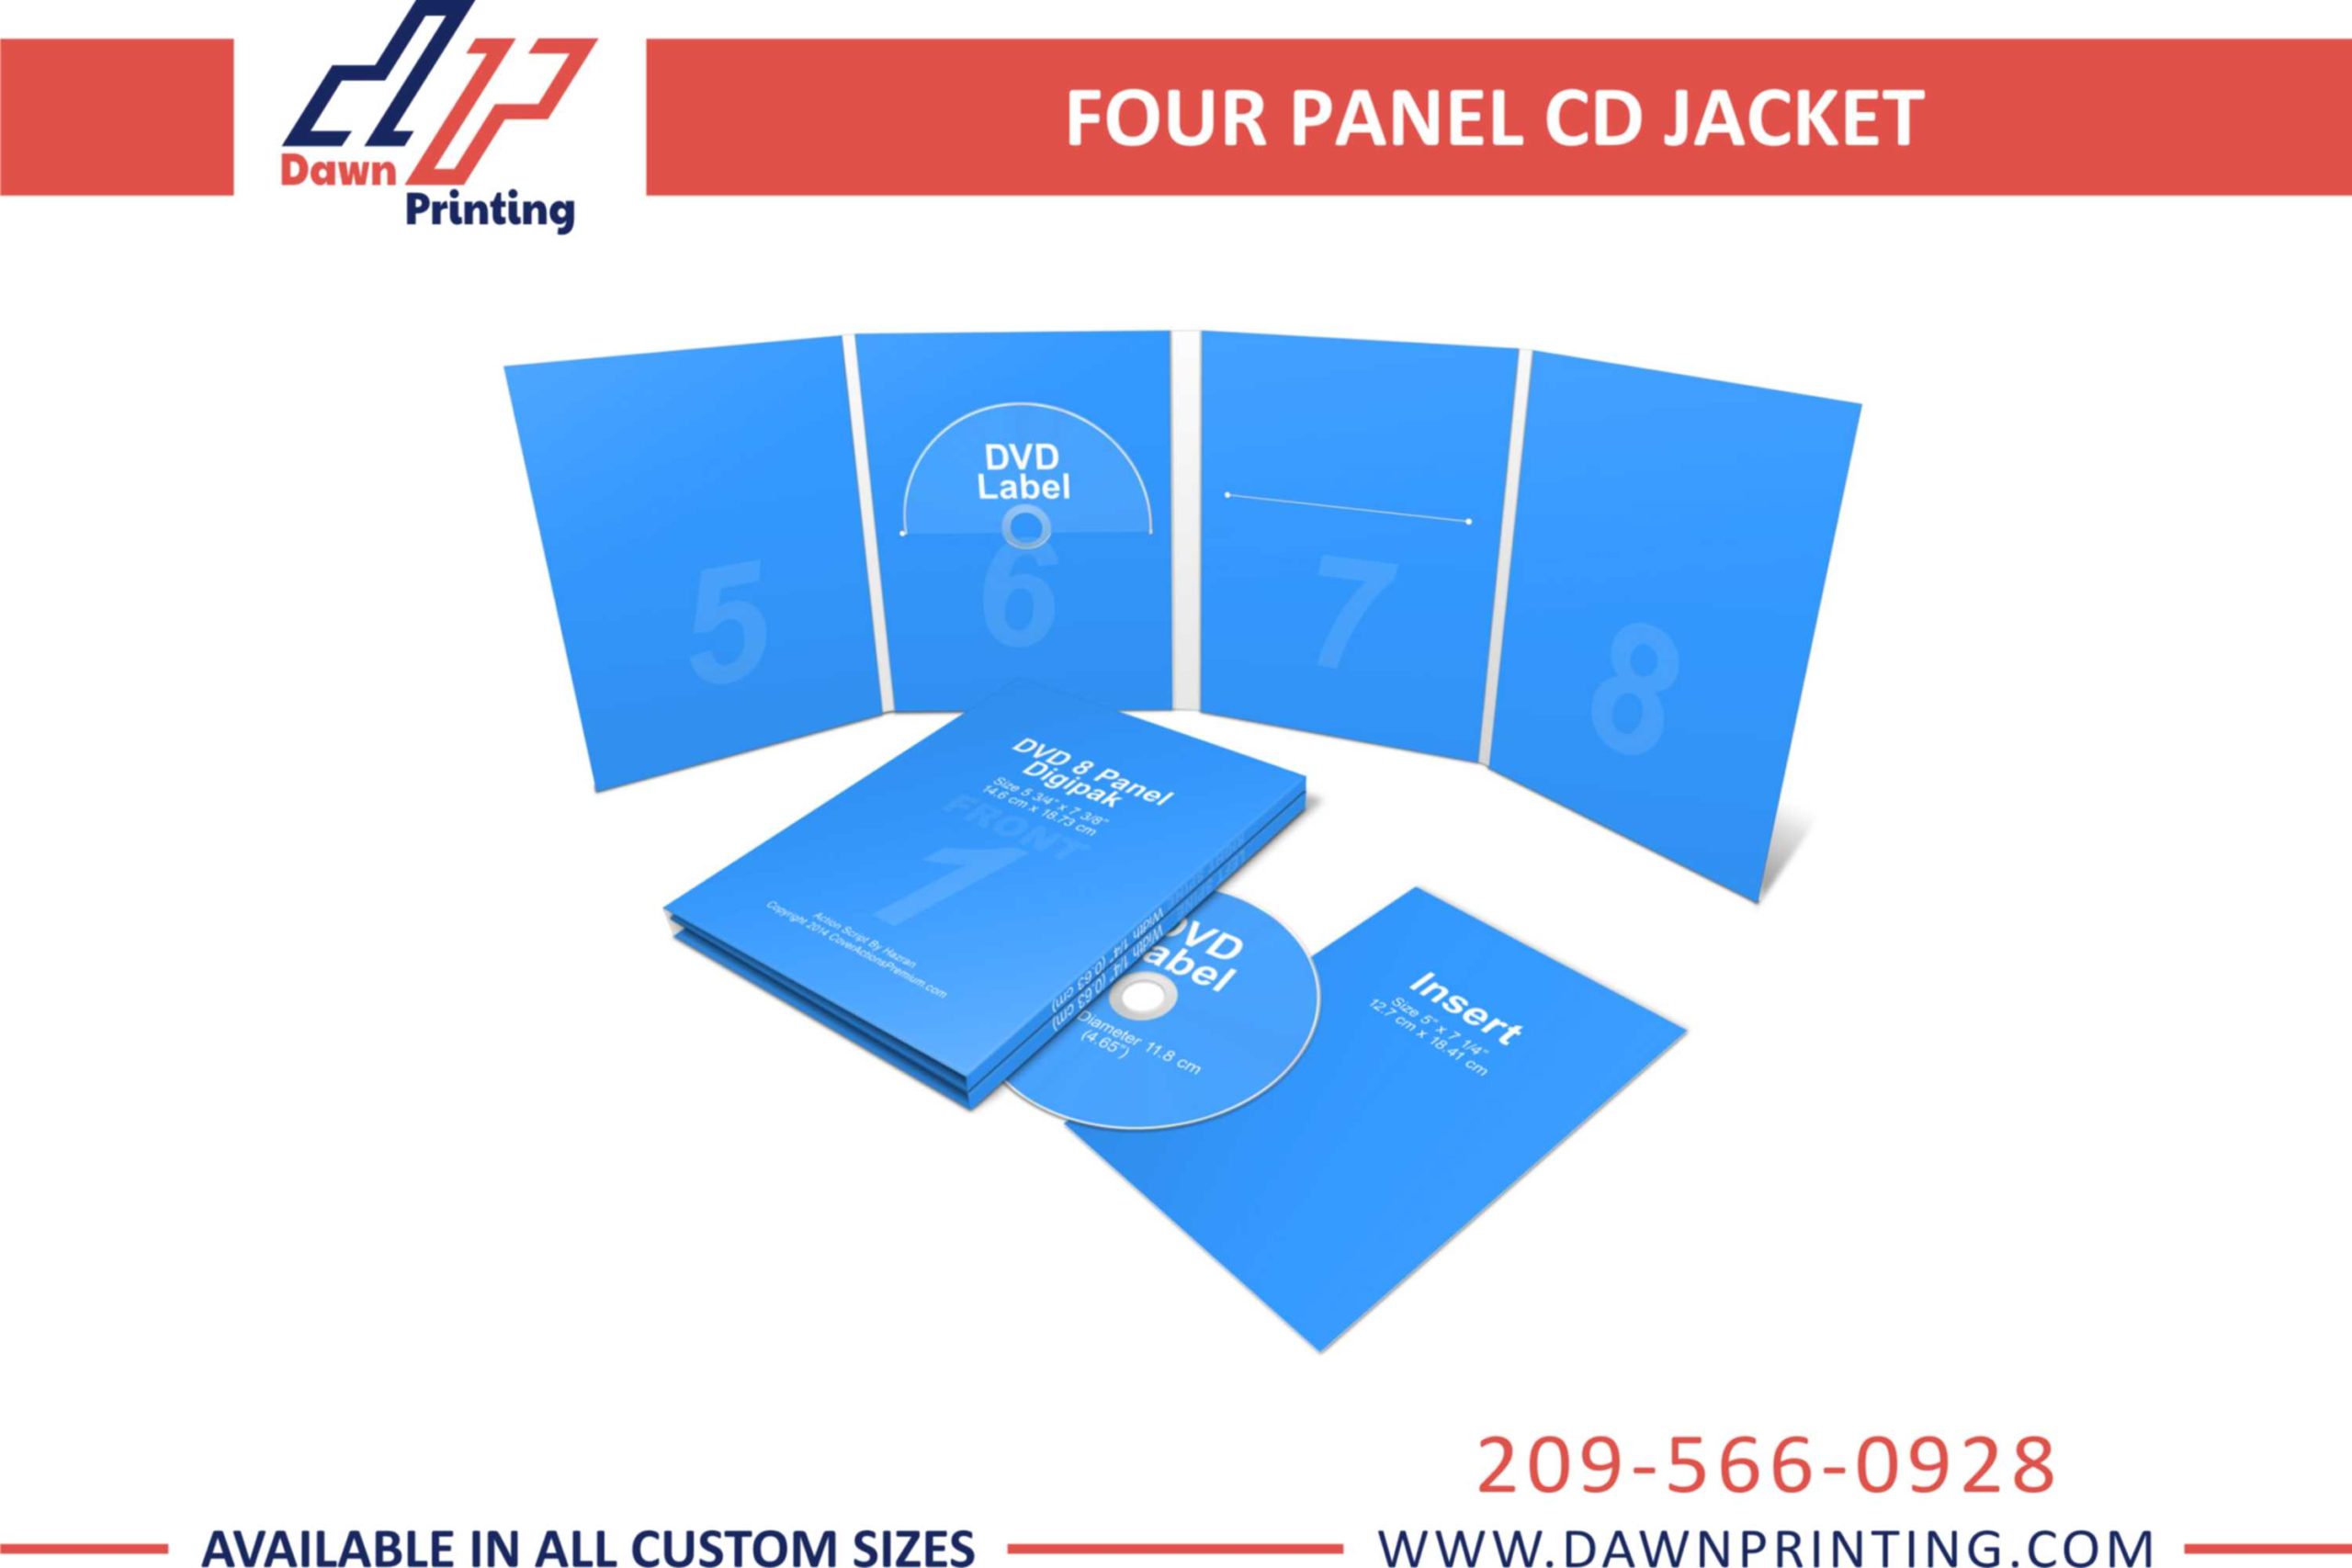 4 Panel CD Jacket Printing - Dawn Printing